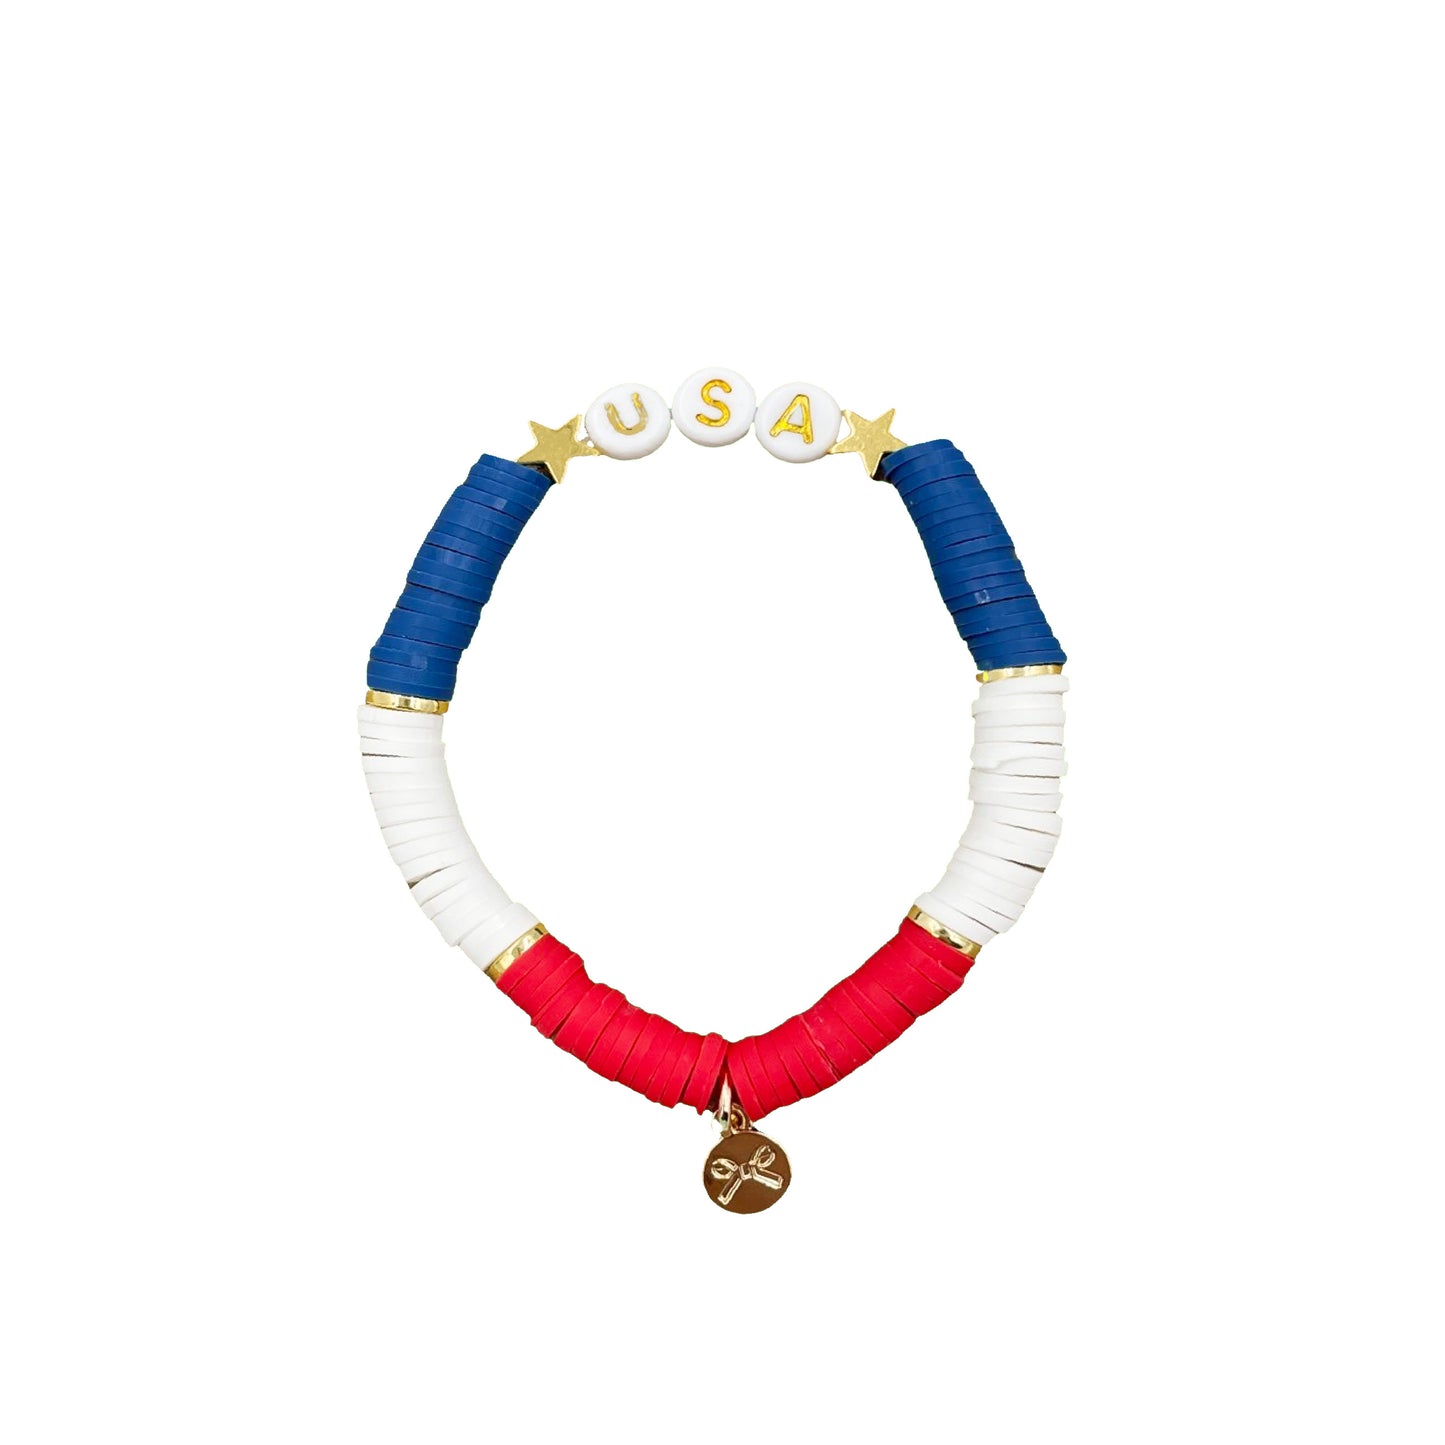 USA Bracelet (Girls)